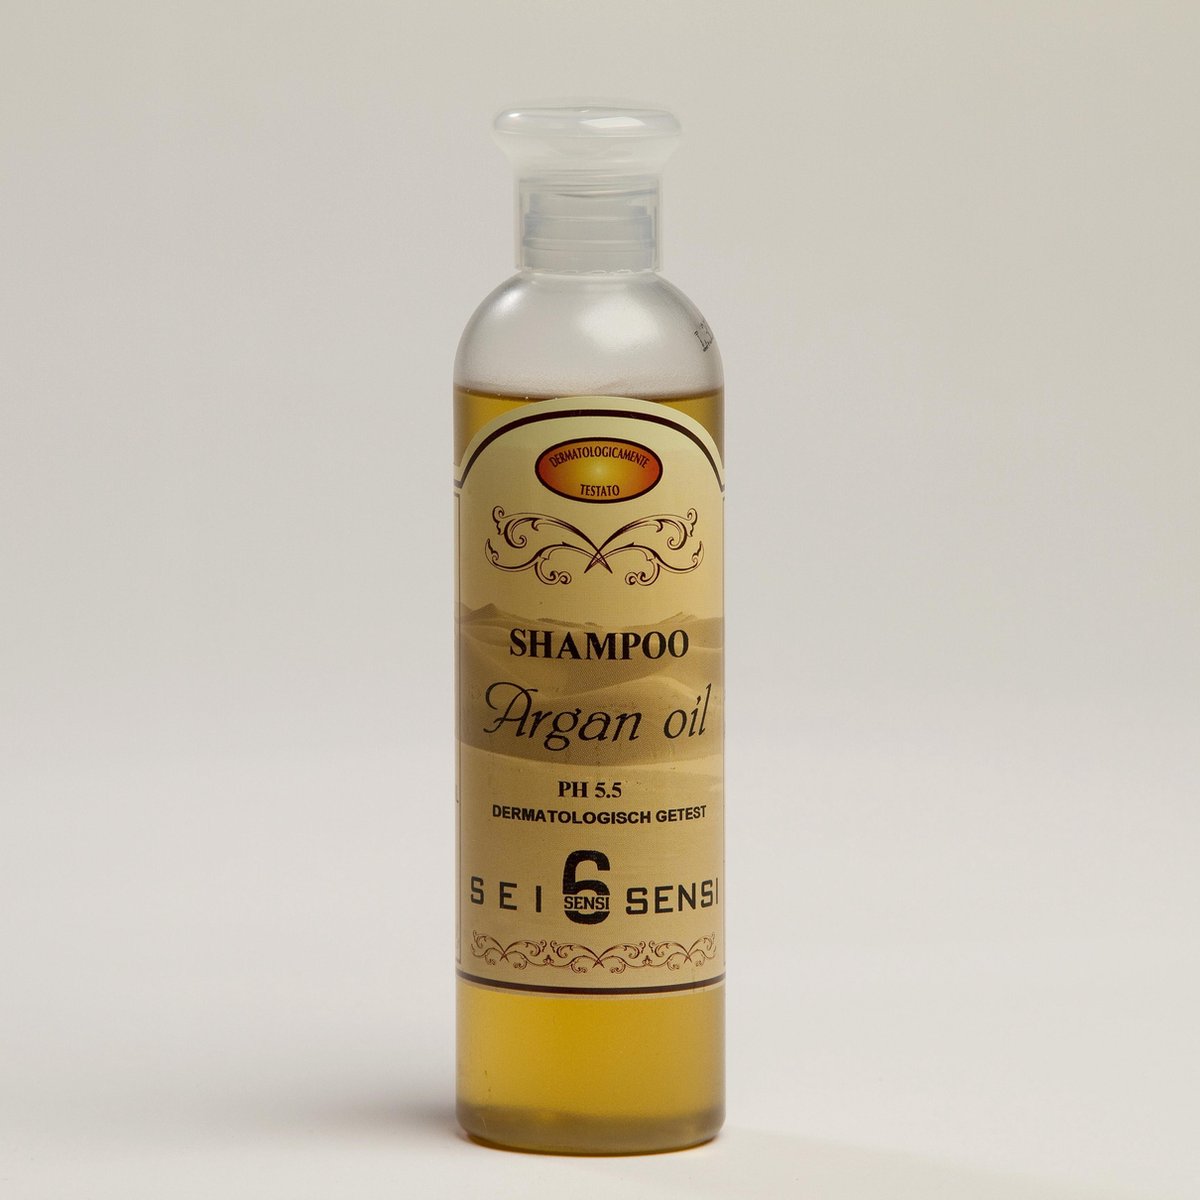 6Sensi - Shampoo met arganolie (250 ml).